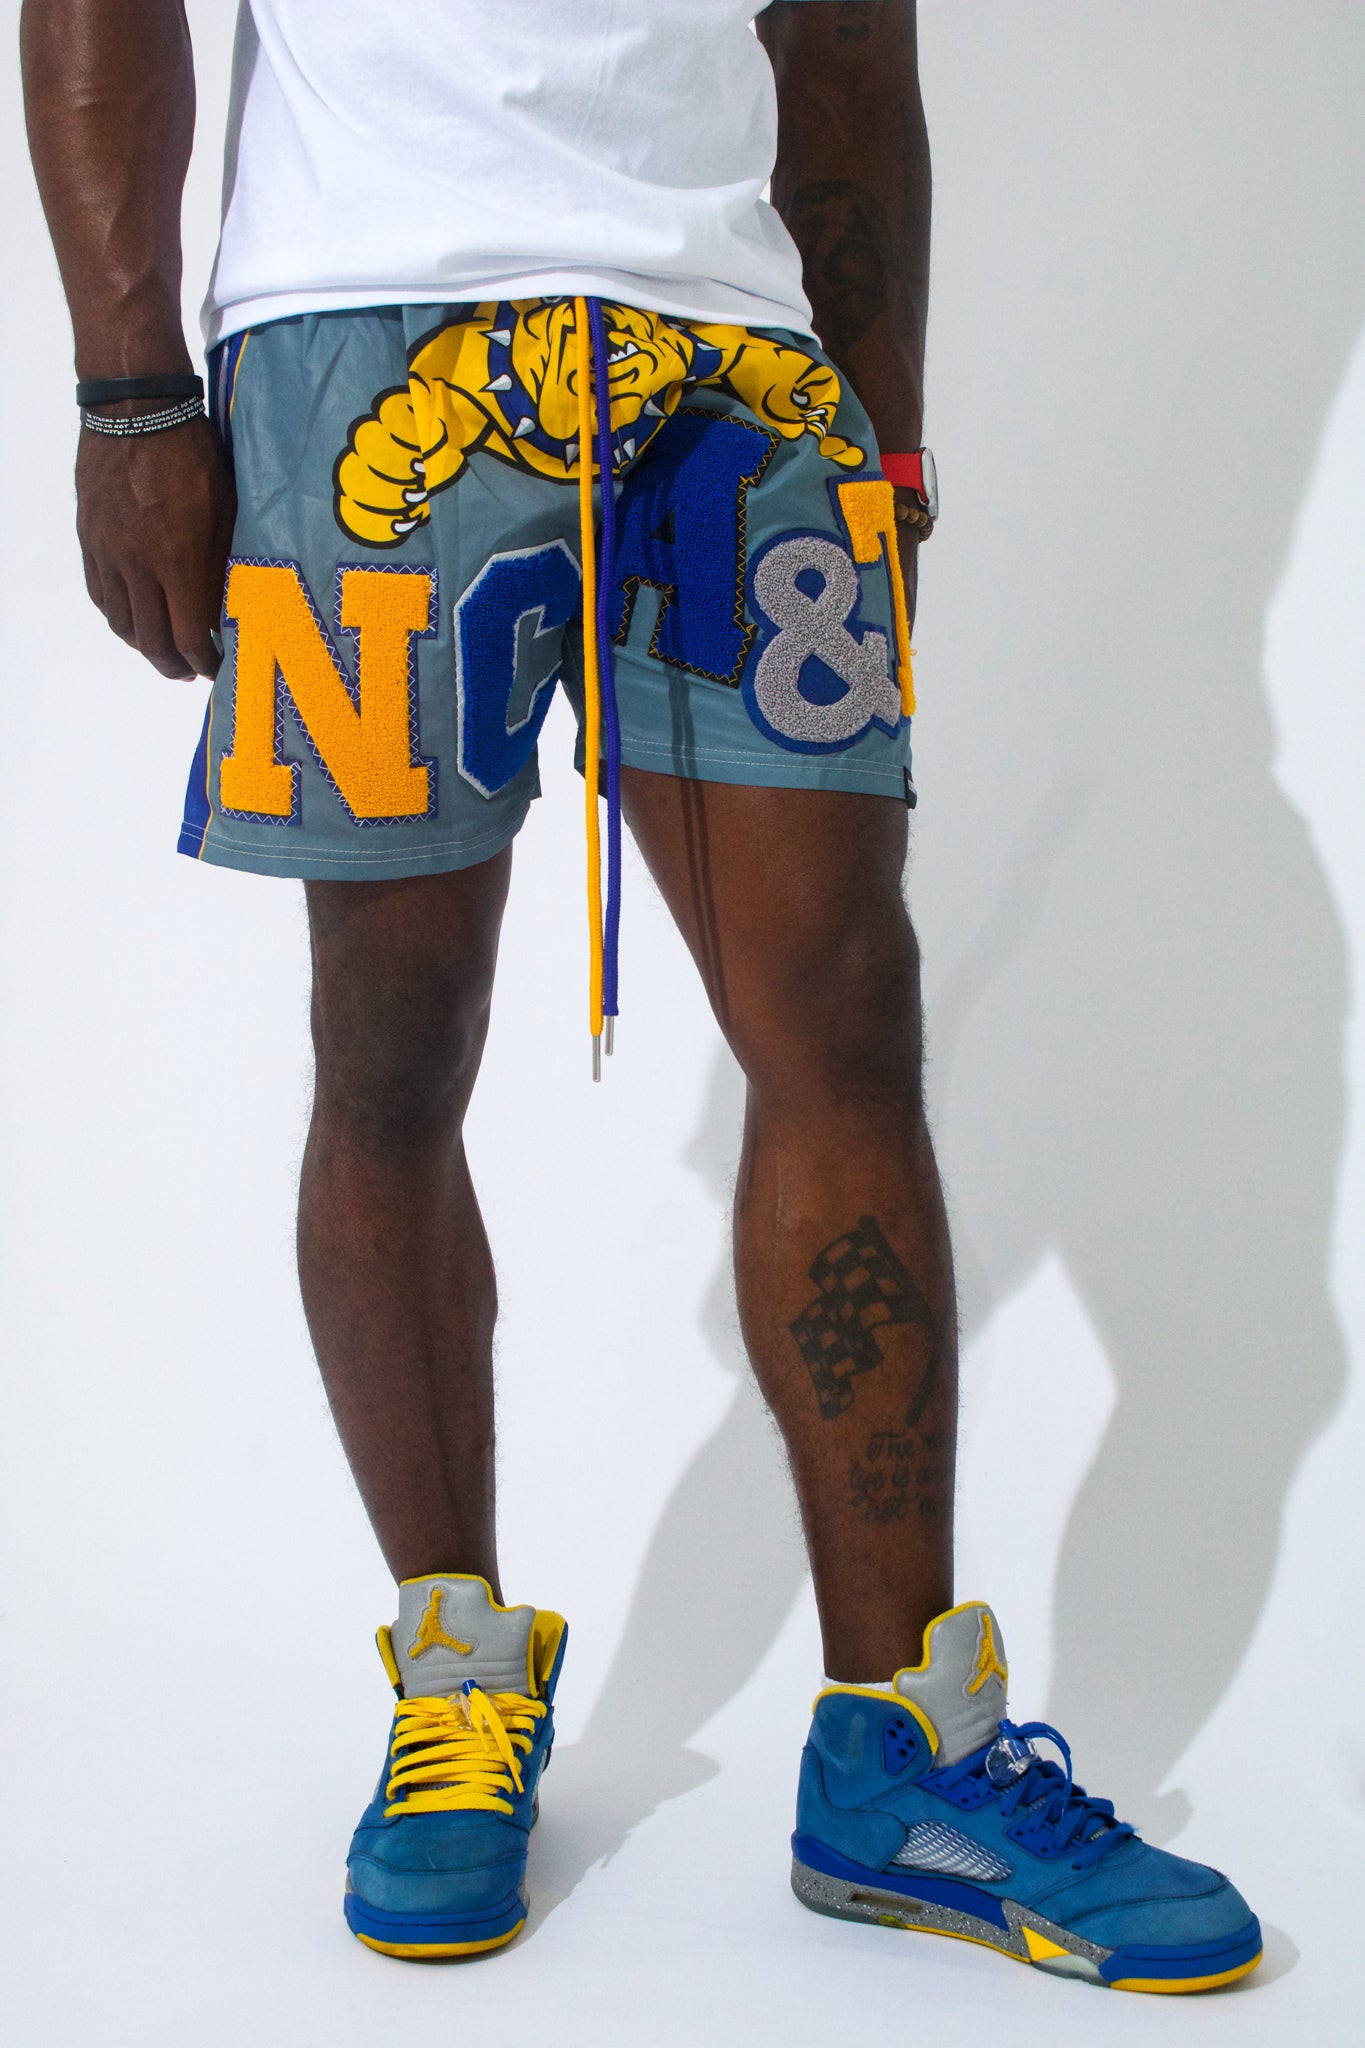 NCAT Shorts